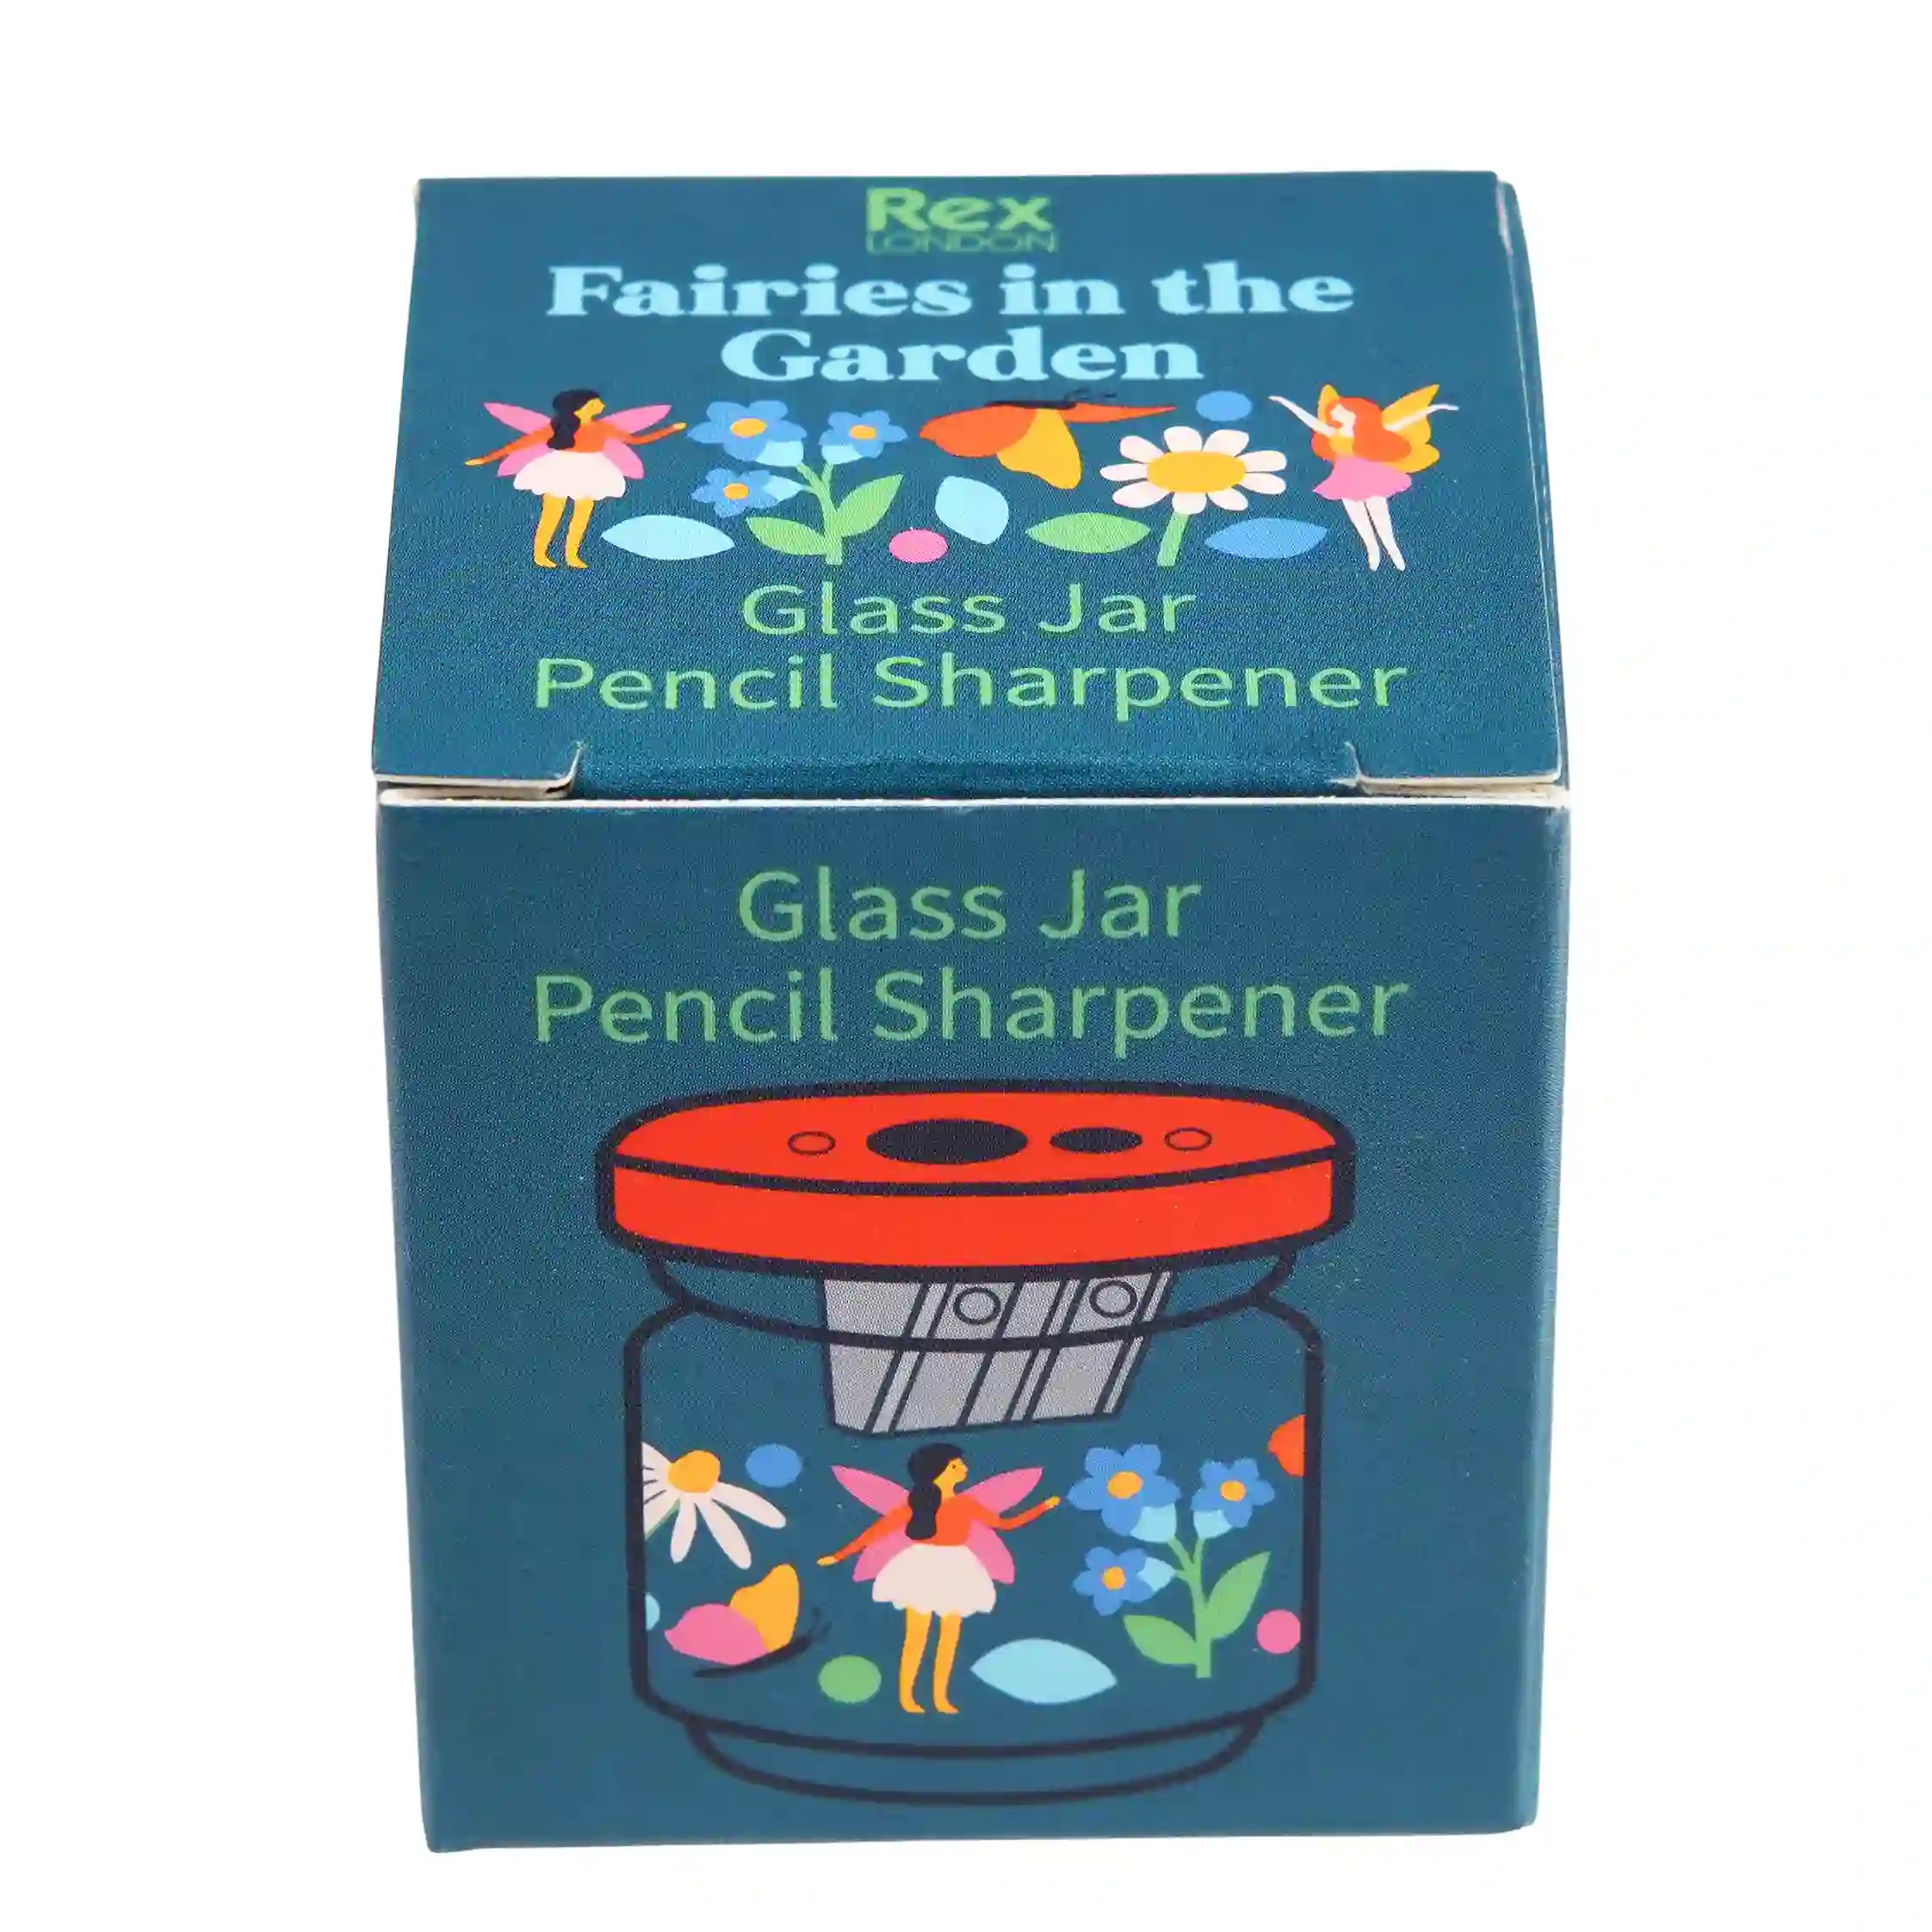 glass jar pencil sharpener - fairies in the garden